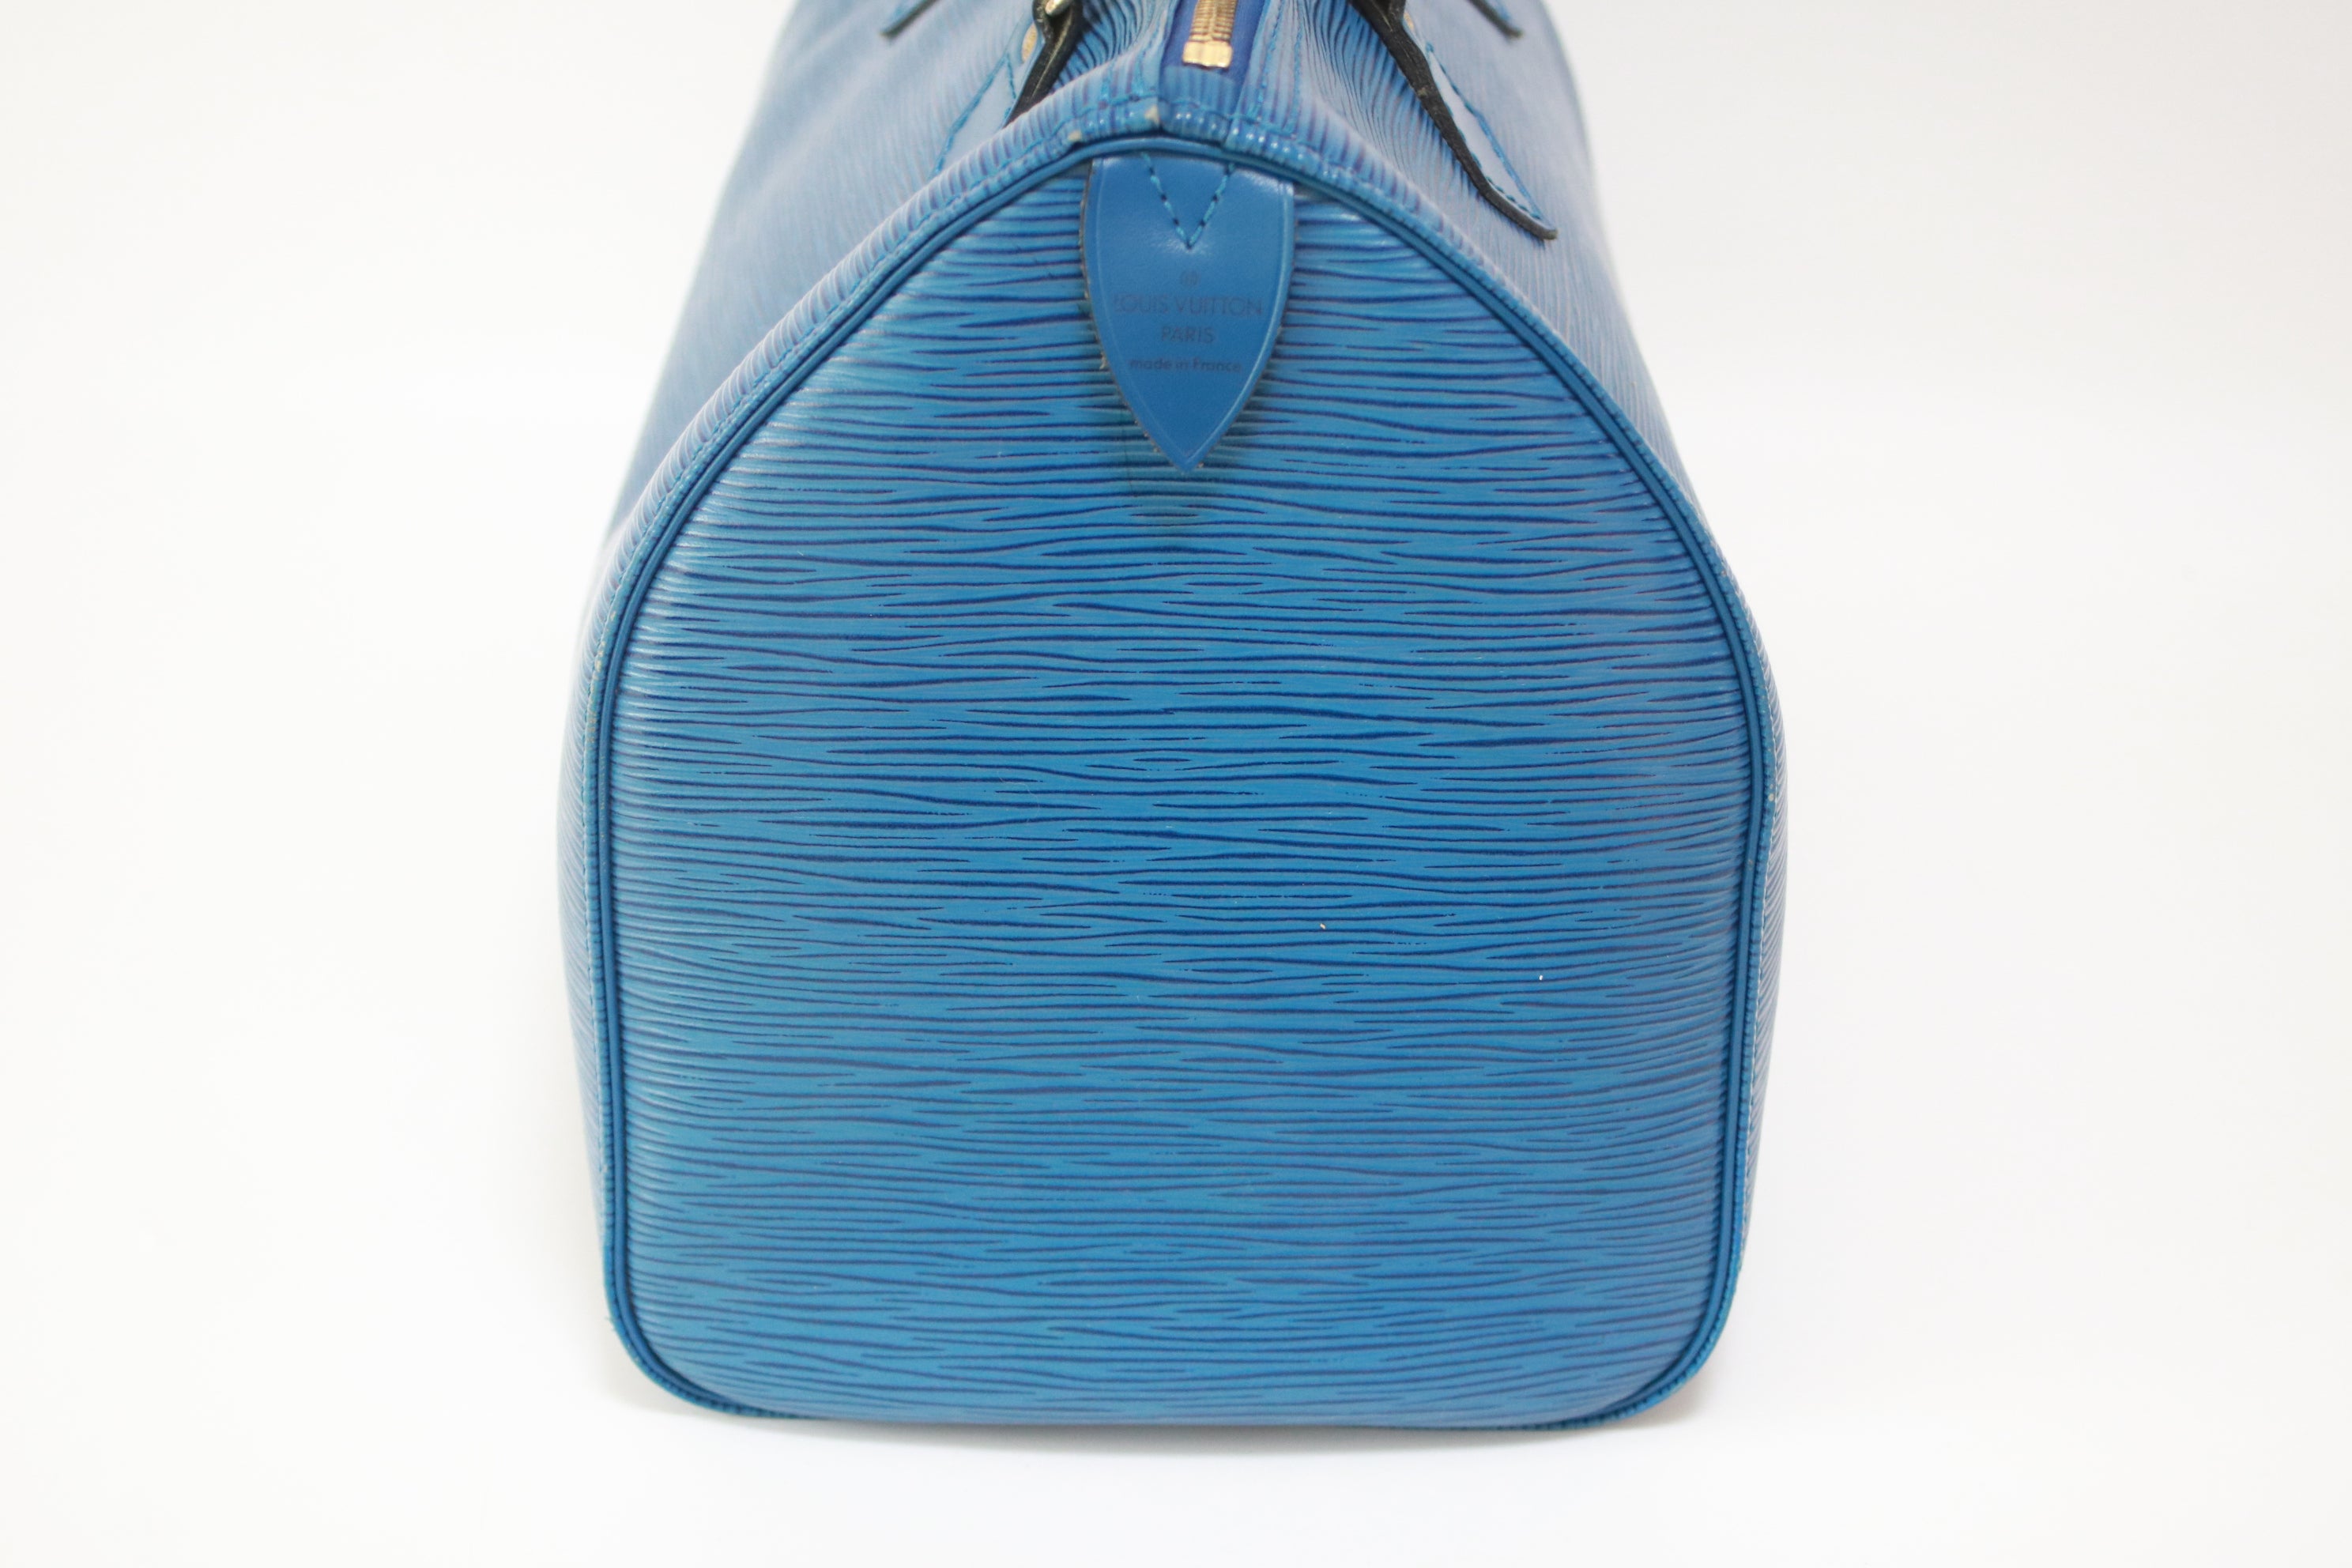 Louis Vuitton Speedy 30 Epi Blue Handbag Used (6842)